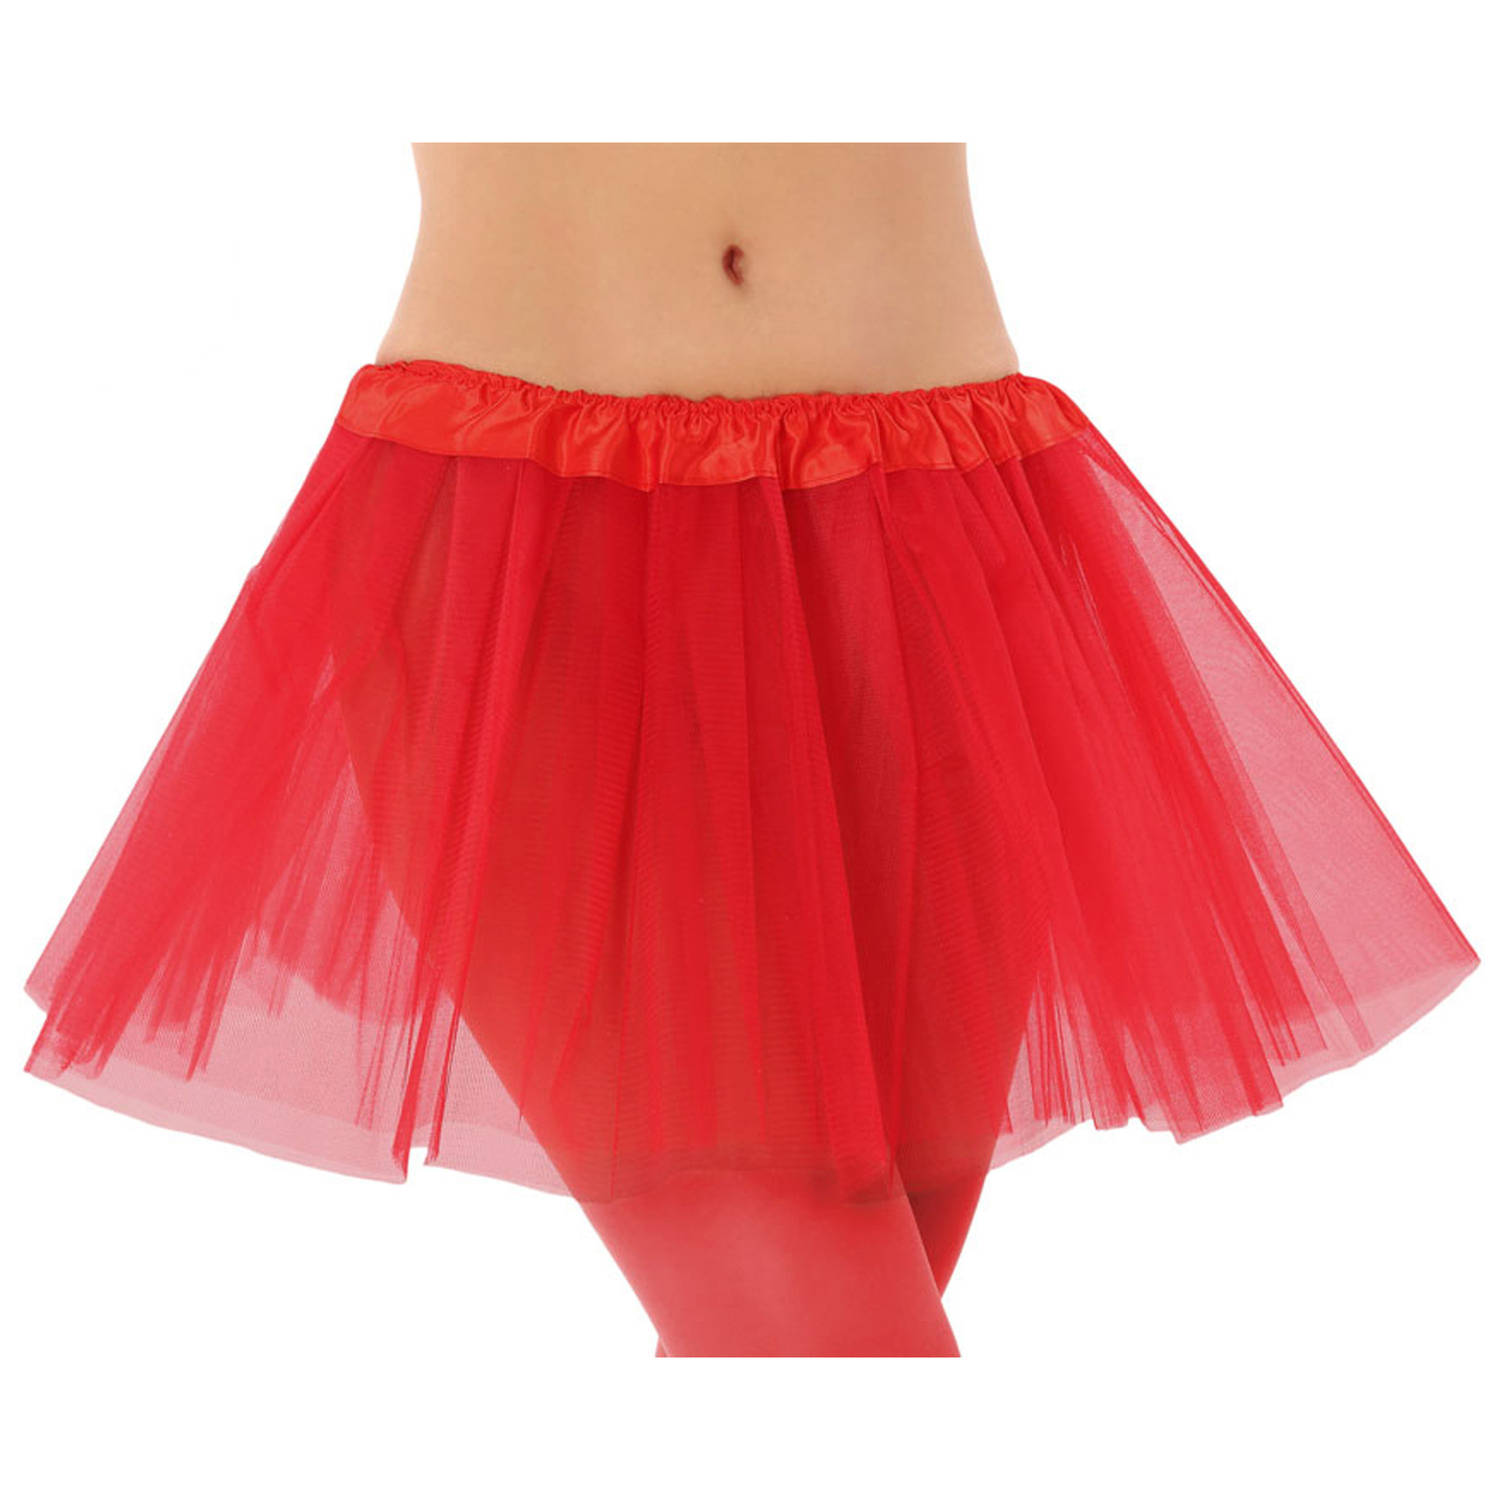 Meisjes verkleed rokje/tutu - tule stof met elastiek - rood - one size - Carnavalskostuums